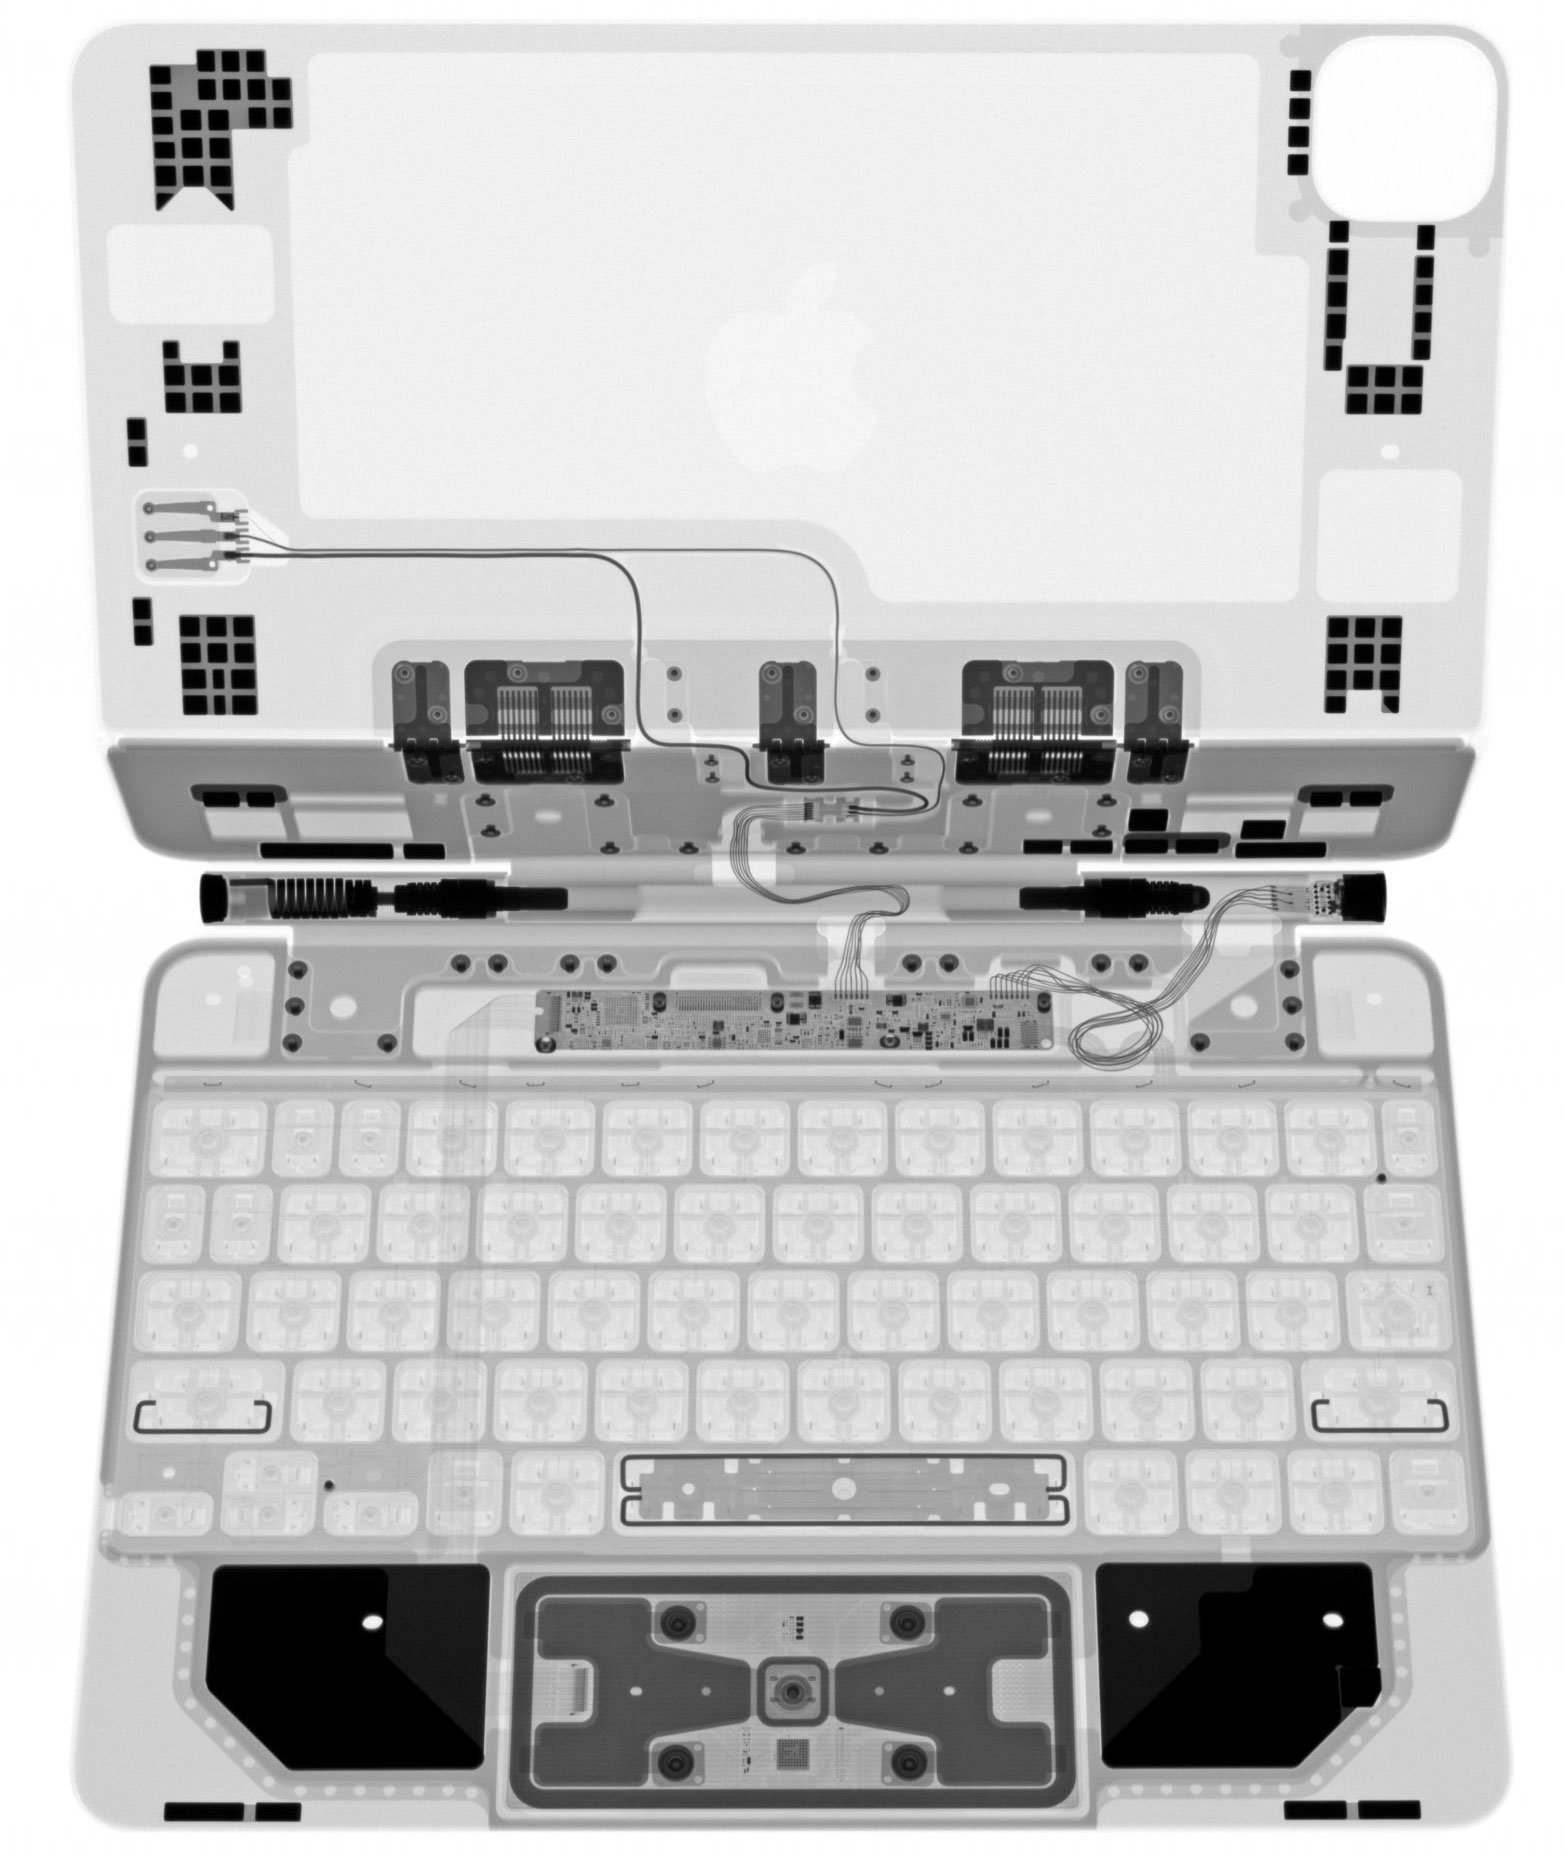 Teclado Magic Keyboard para iPad Pro, visto a rayos X